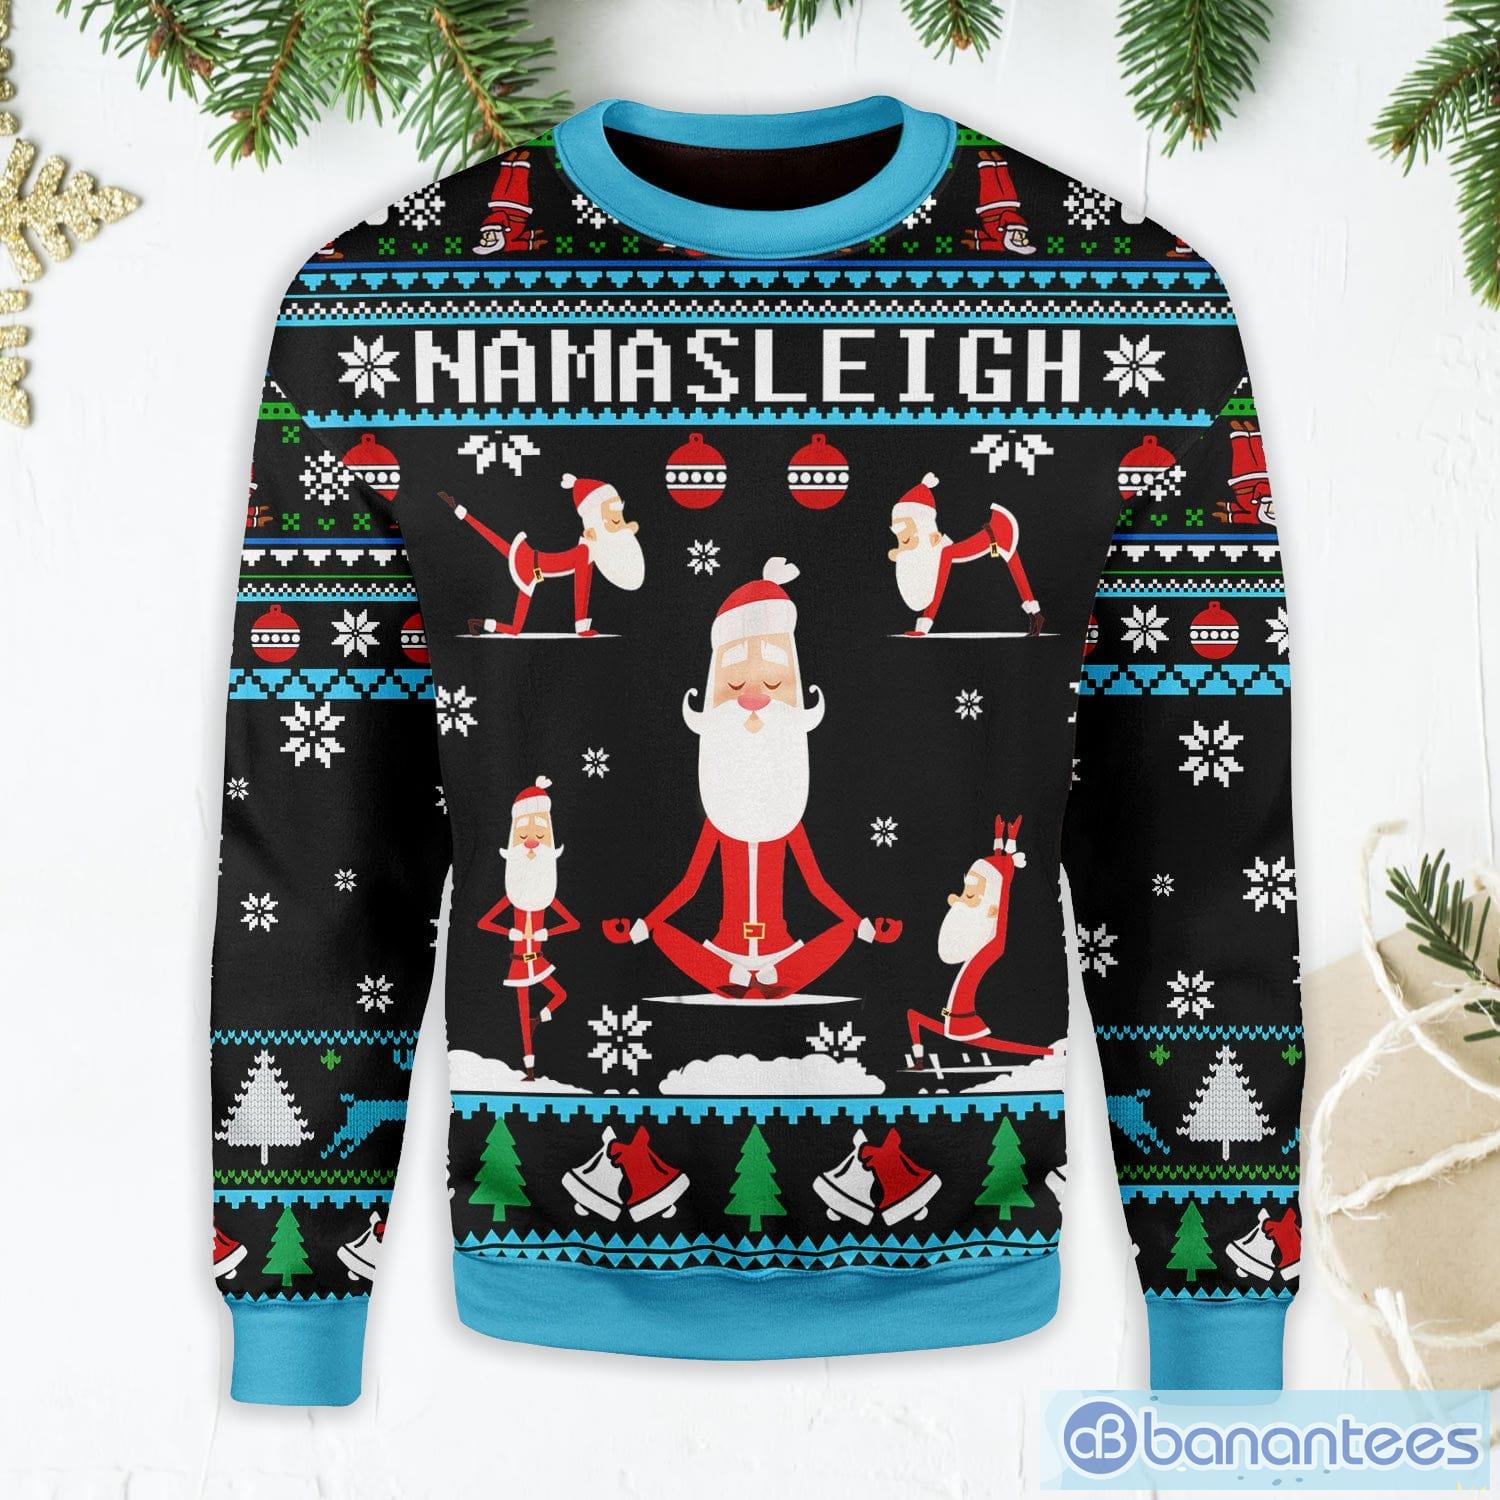 Namasleigh Santa Ugly Christmas Sweater Product Photo 1